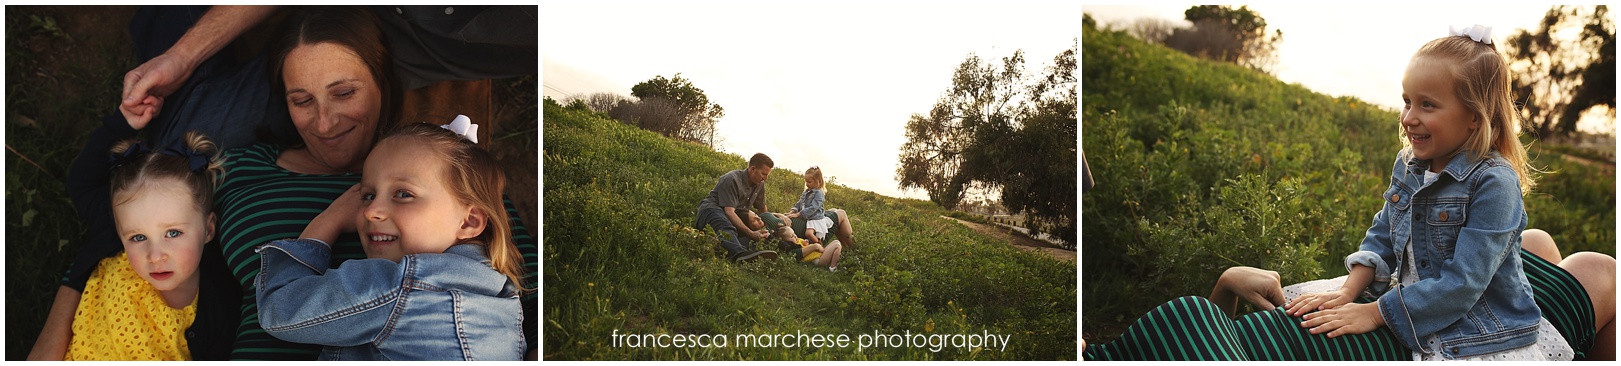 Long Beach maternity family photographer - Francesca Marchese Photography